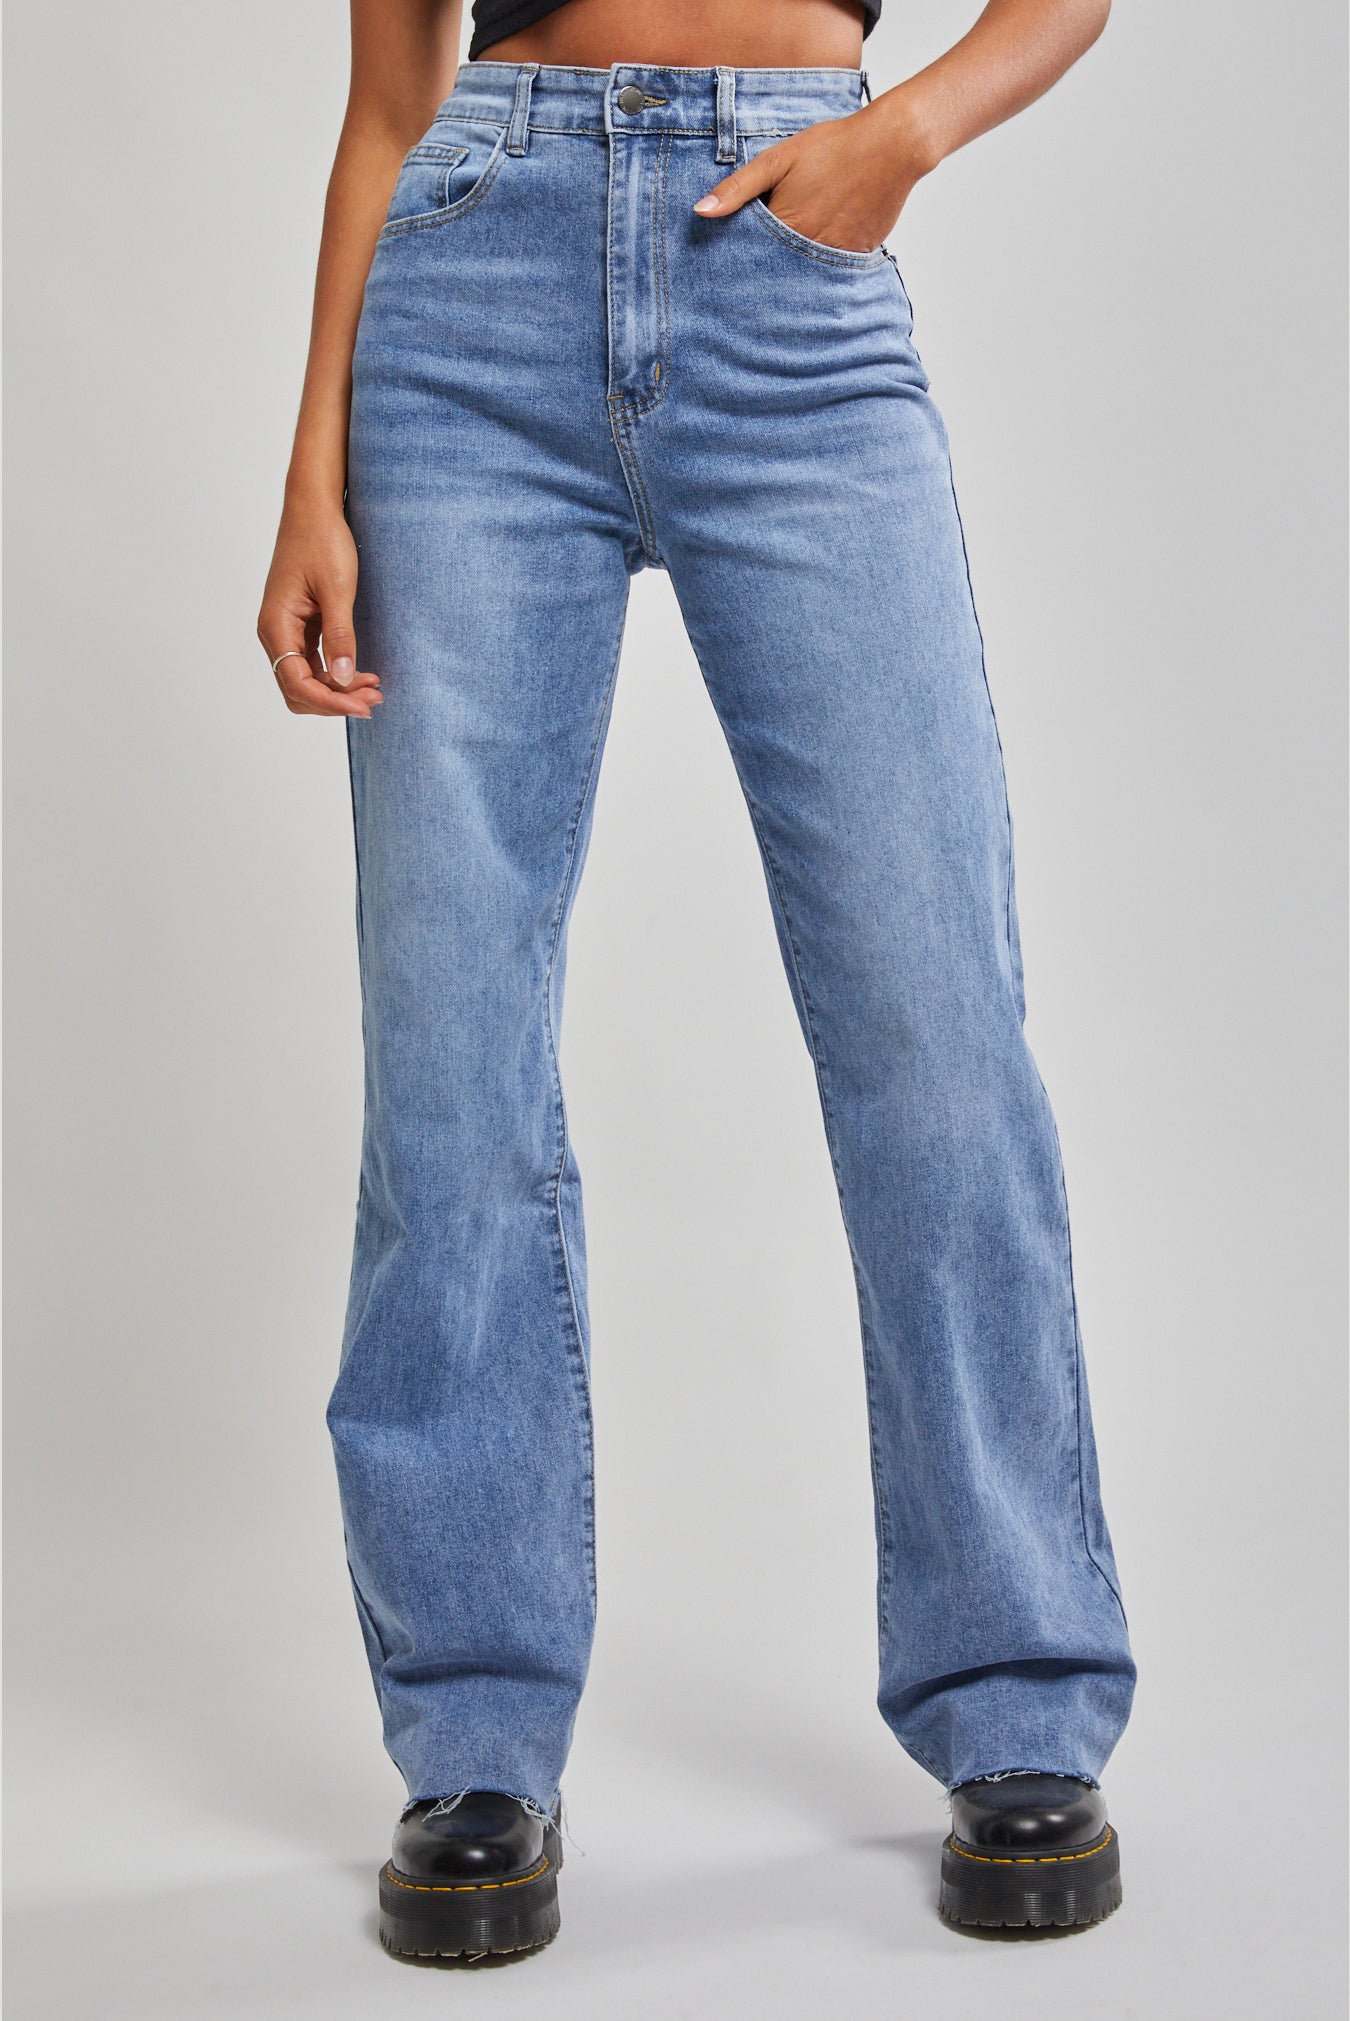 Antigoni Jeans | North Beach